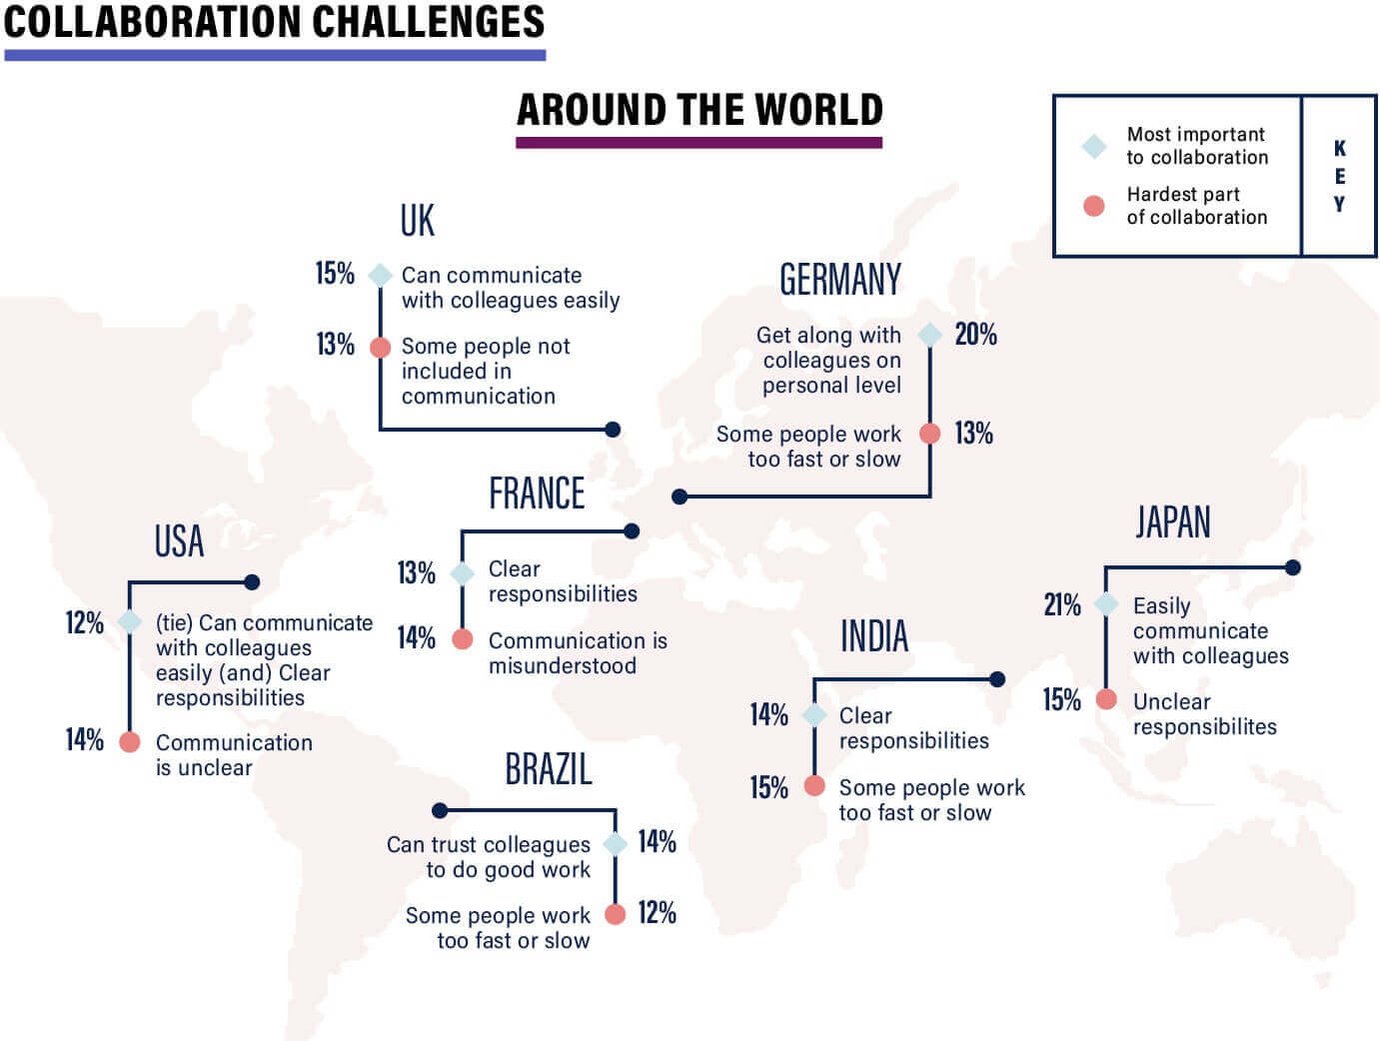 slack survey global collaboration challenges map